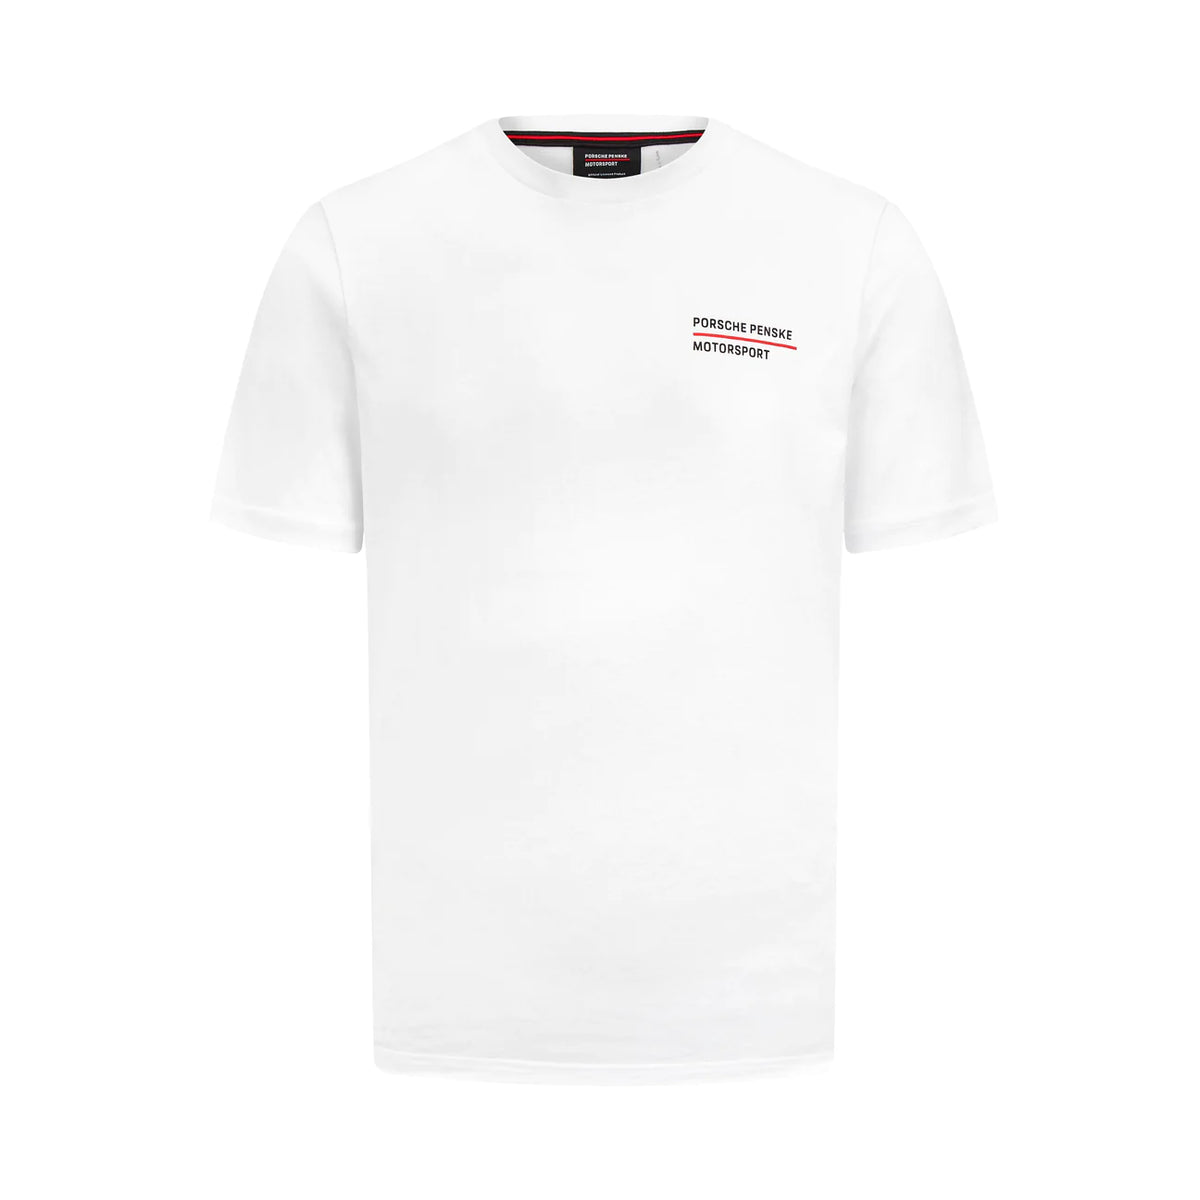 Porsche Penske Motorsport Graphic T-Shirt - White